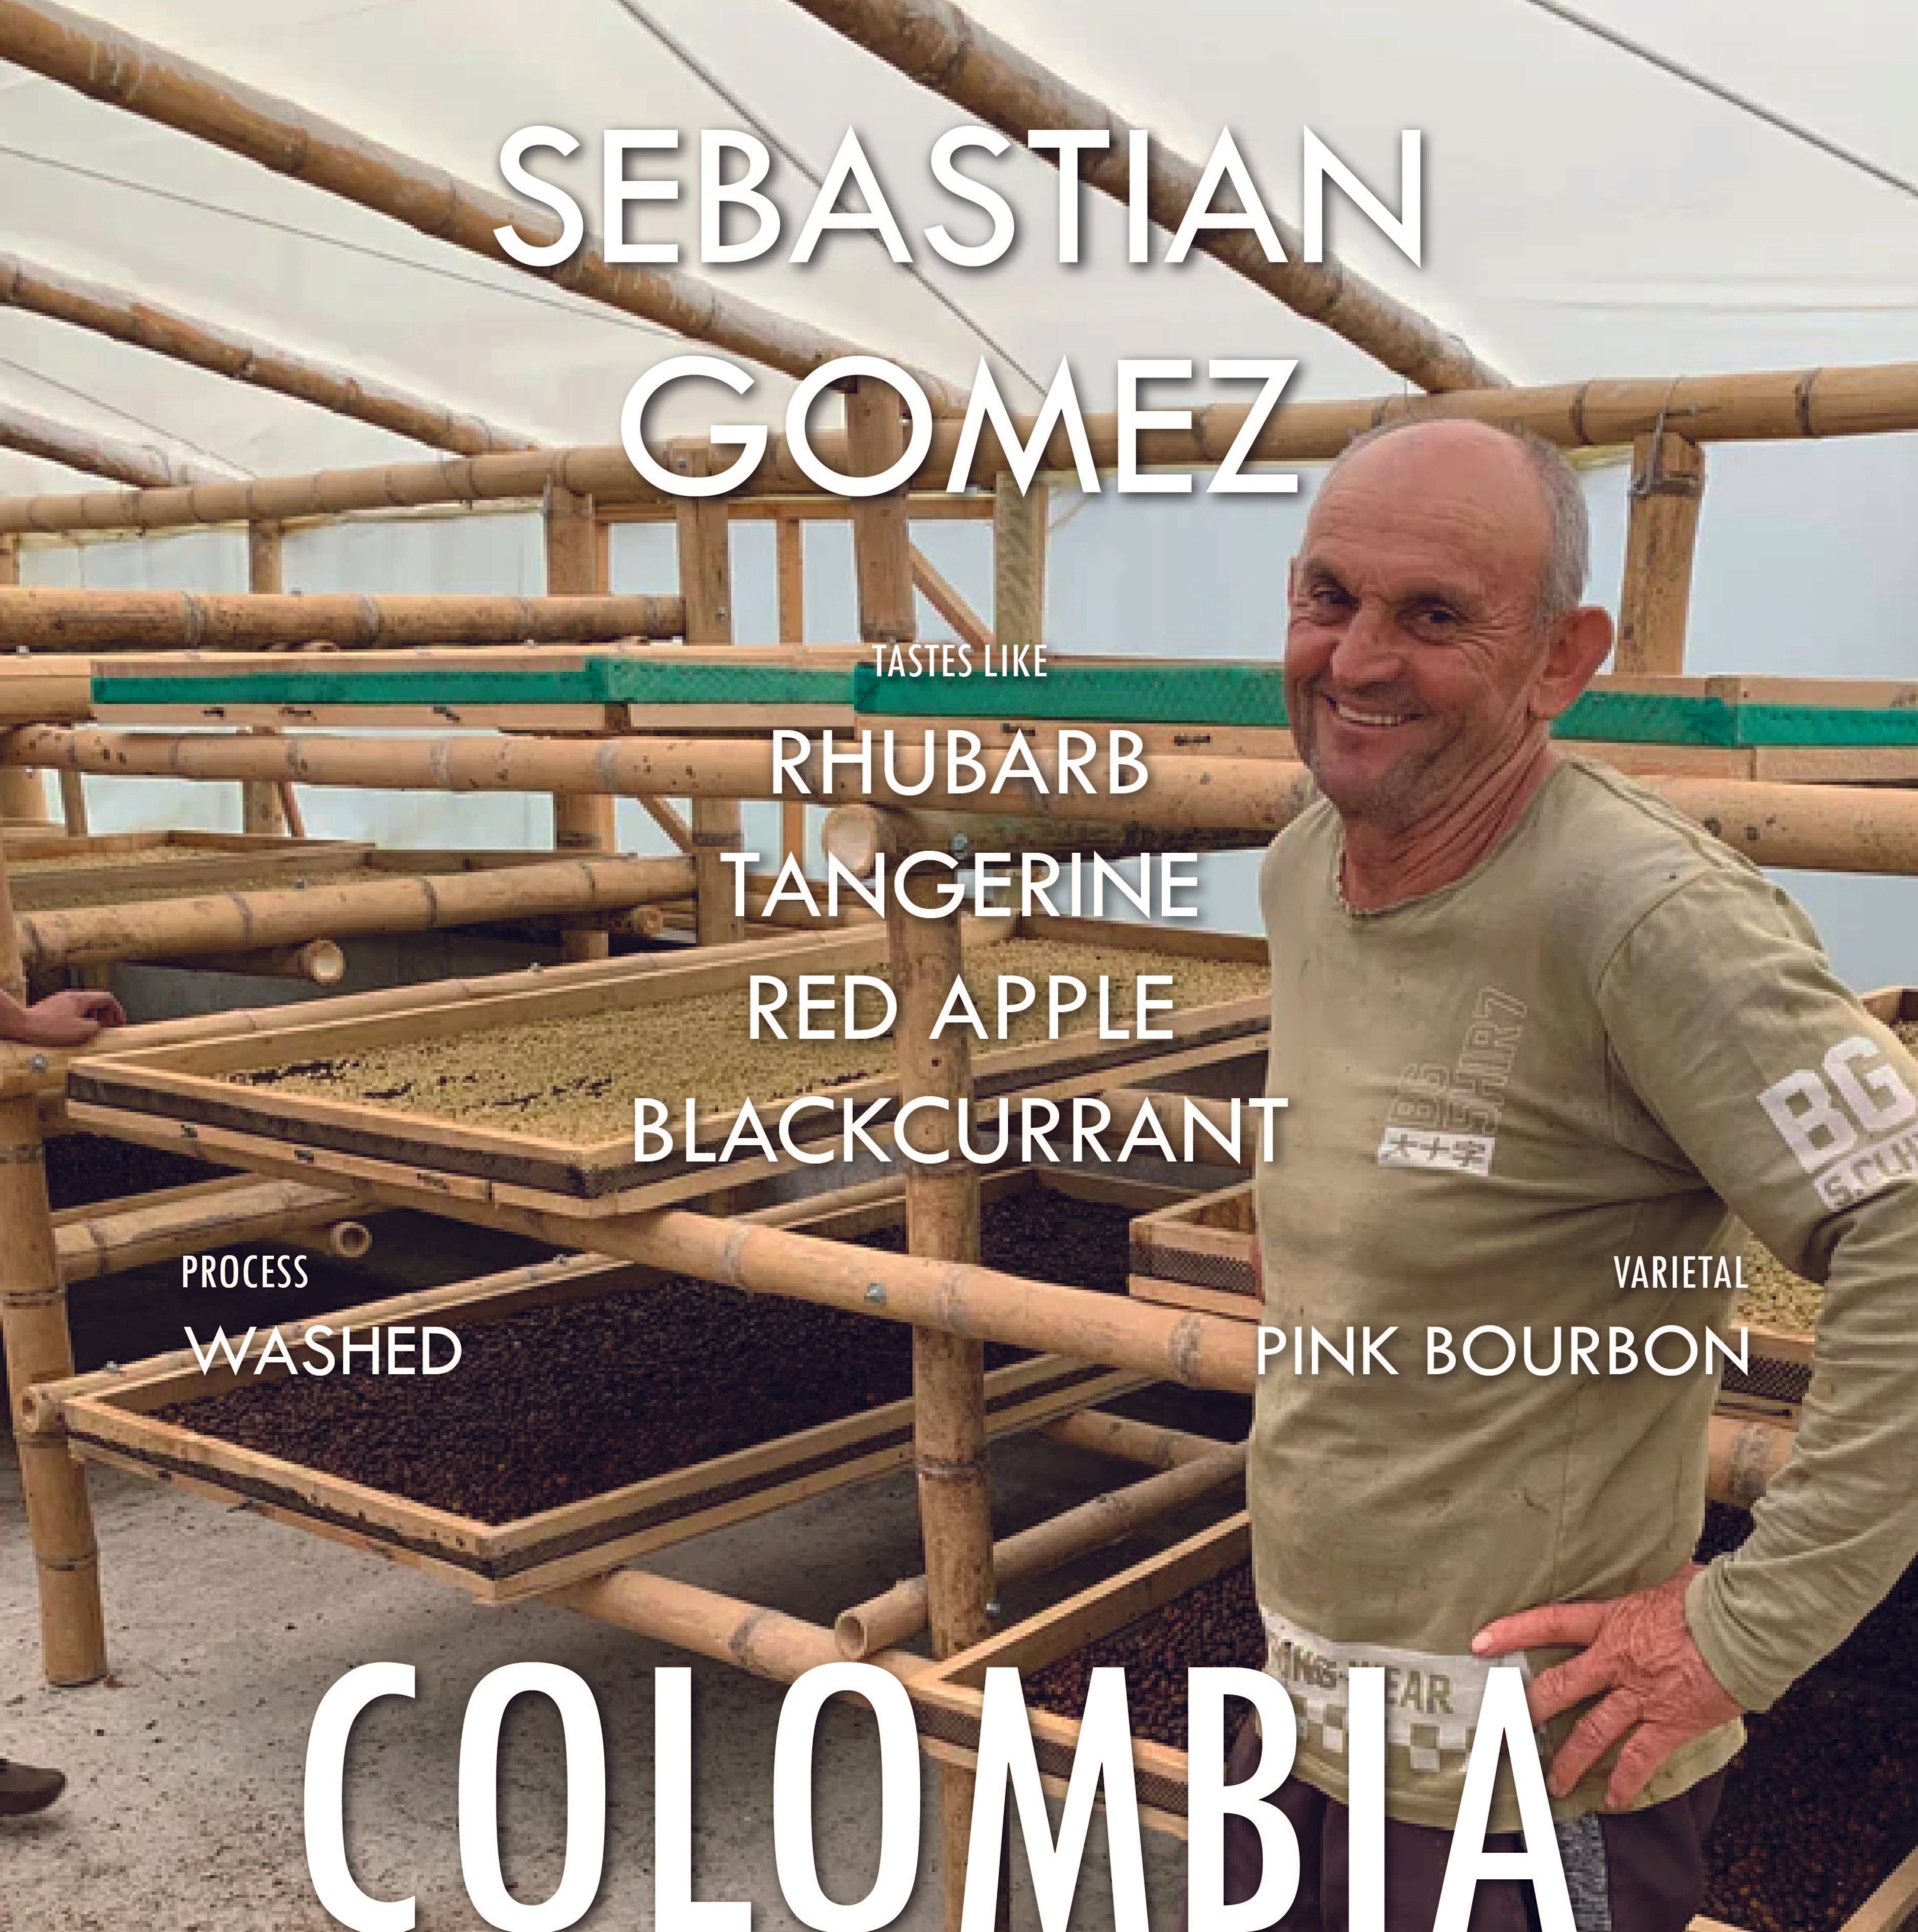 Colombia Sebastian Gomez Pink Bourbon Washed- Filter Roast